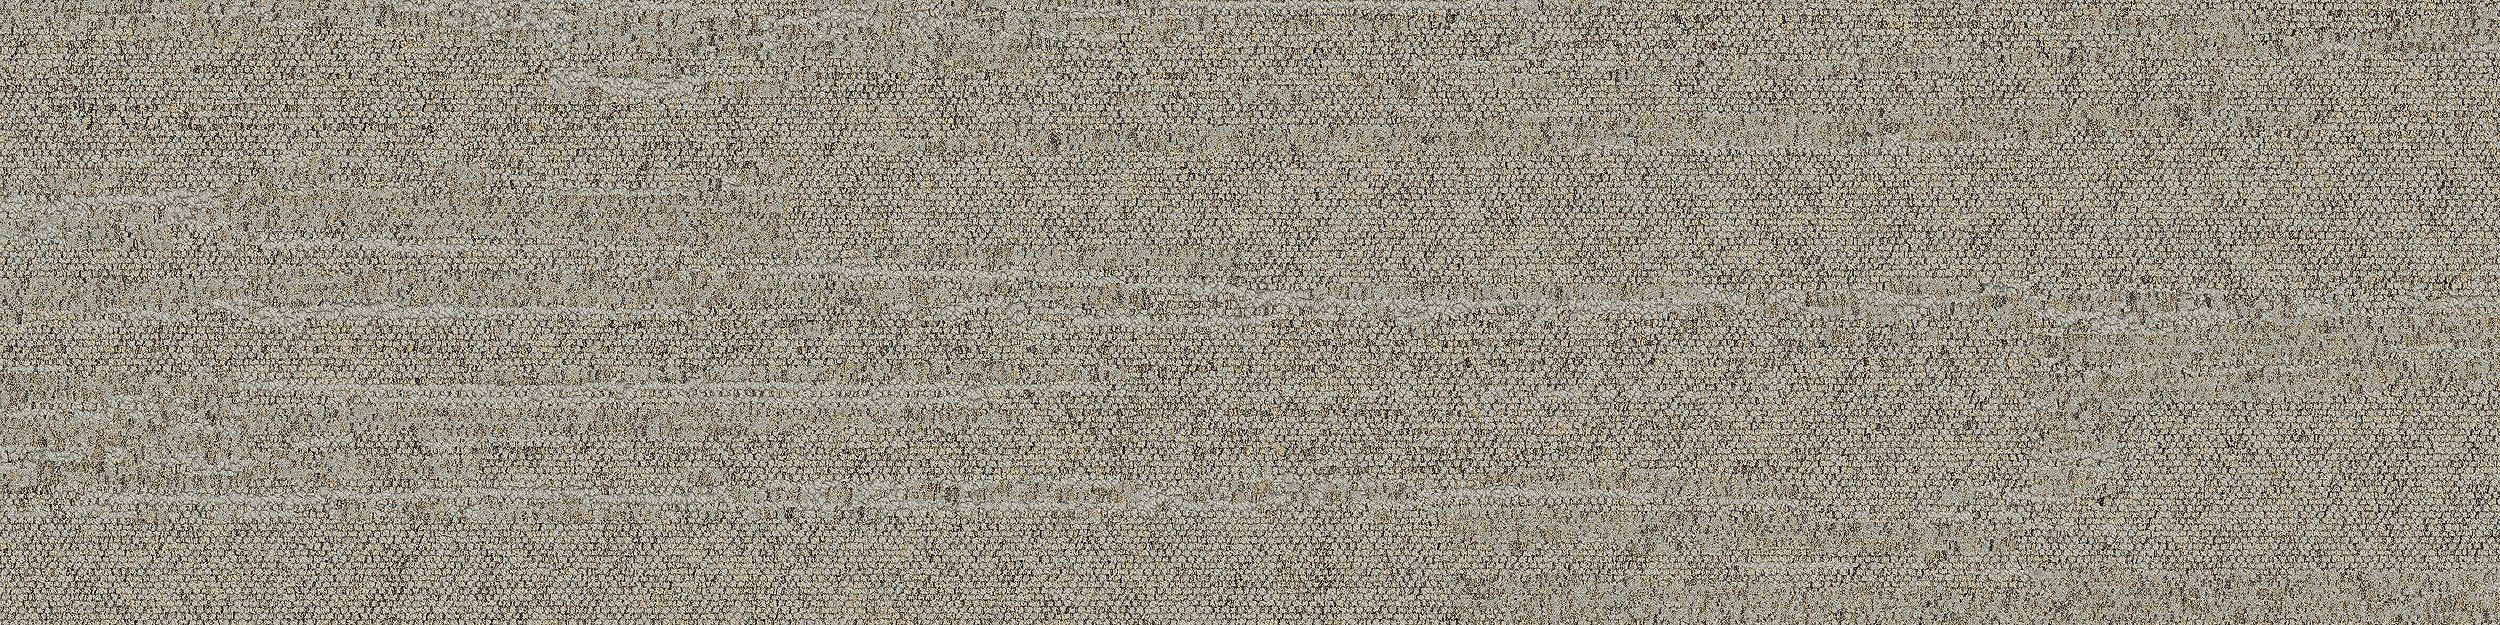 Tide Pool Ripple Carpet Tile In Linen Ripple imagen número 2